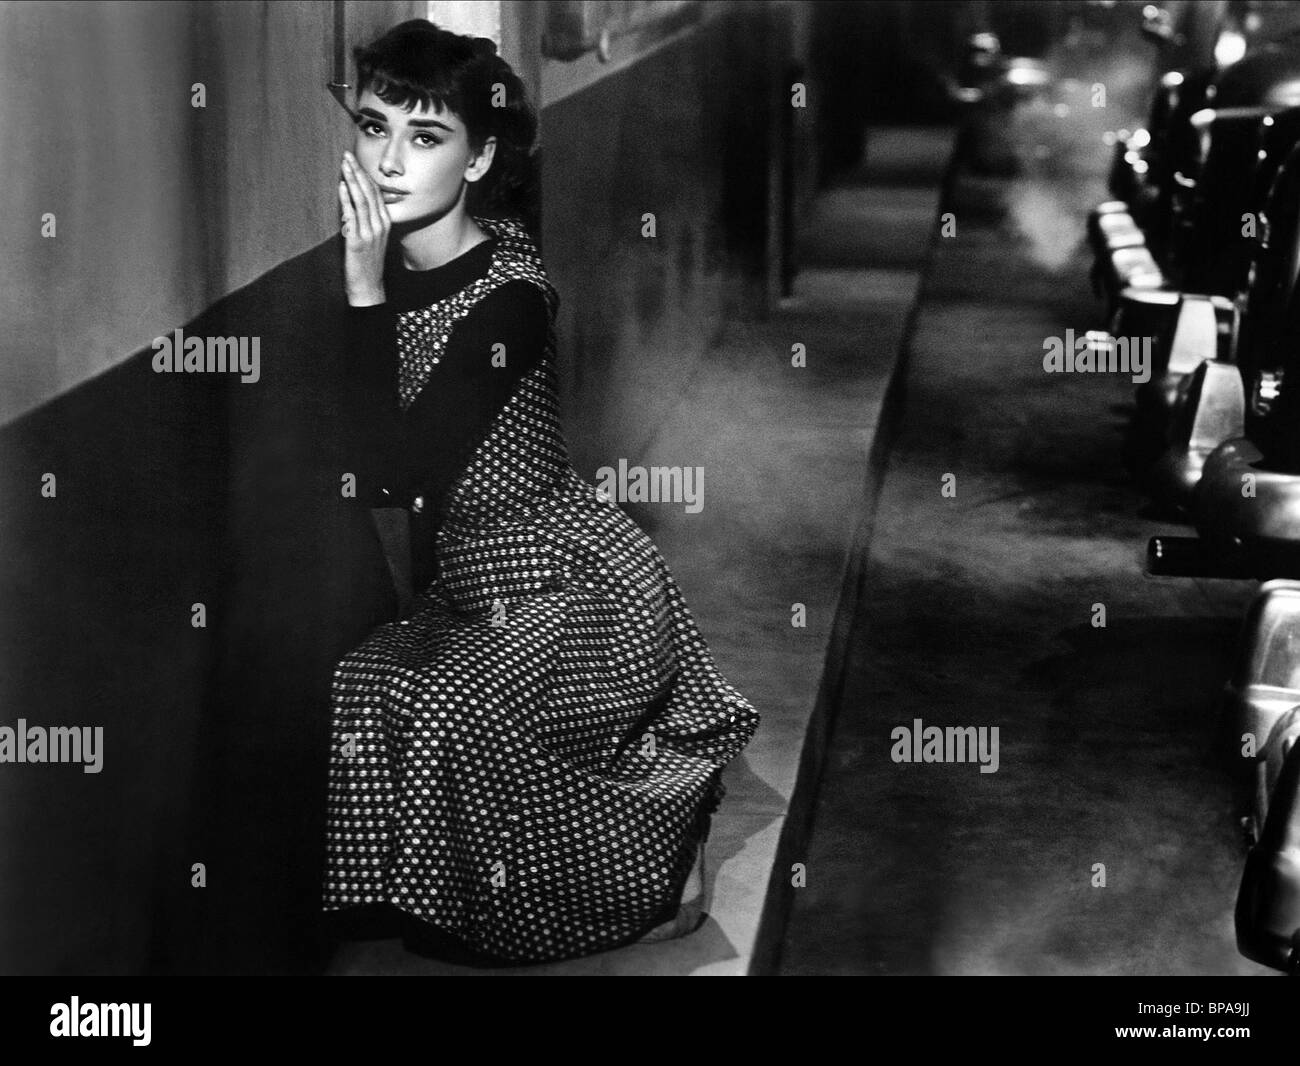 Audrey Hepburn Sabrina High Resolution Stock Photography and Images - Alamy